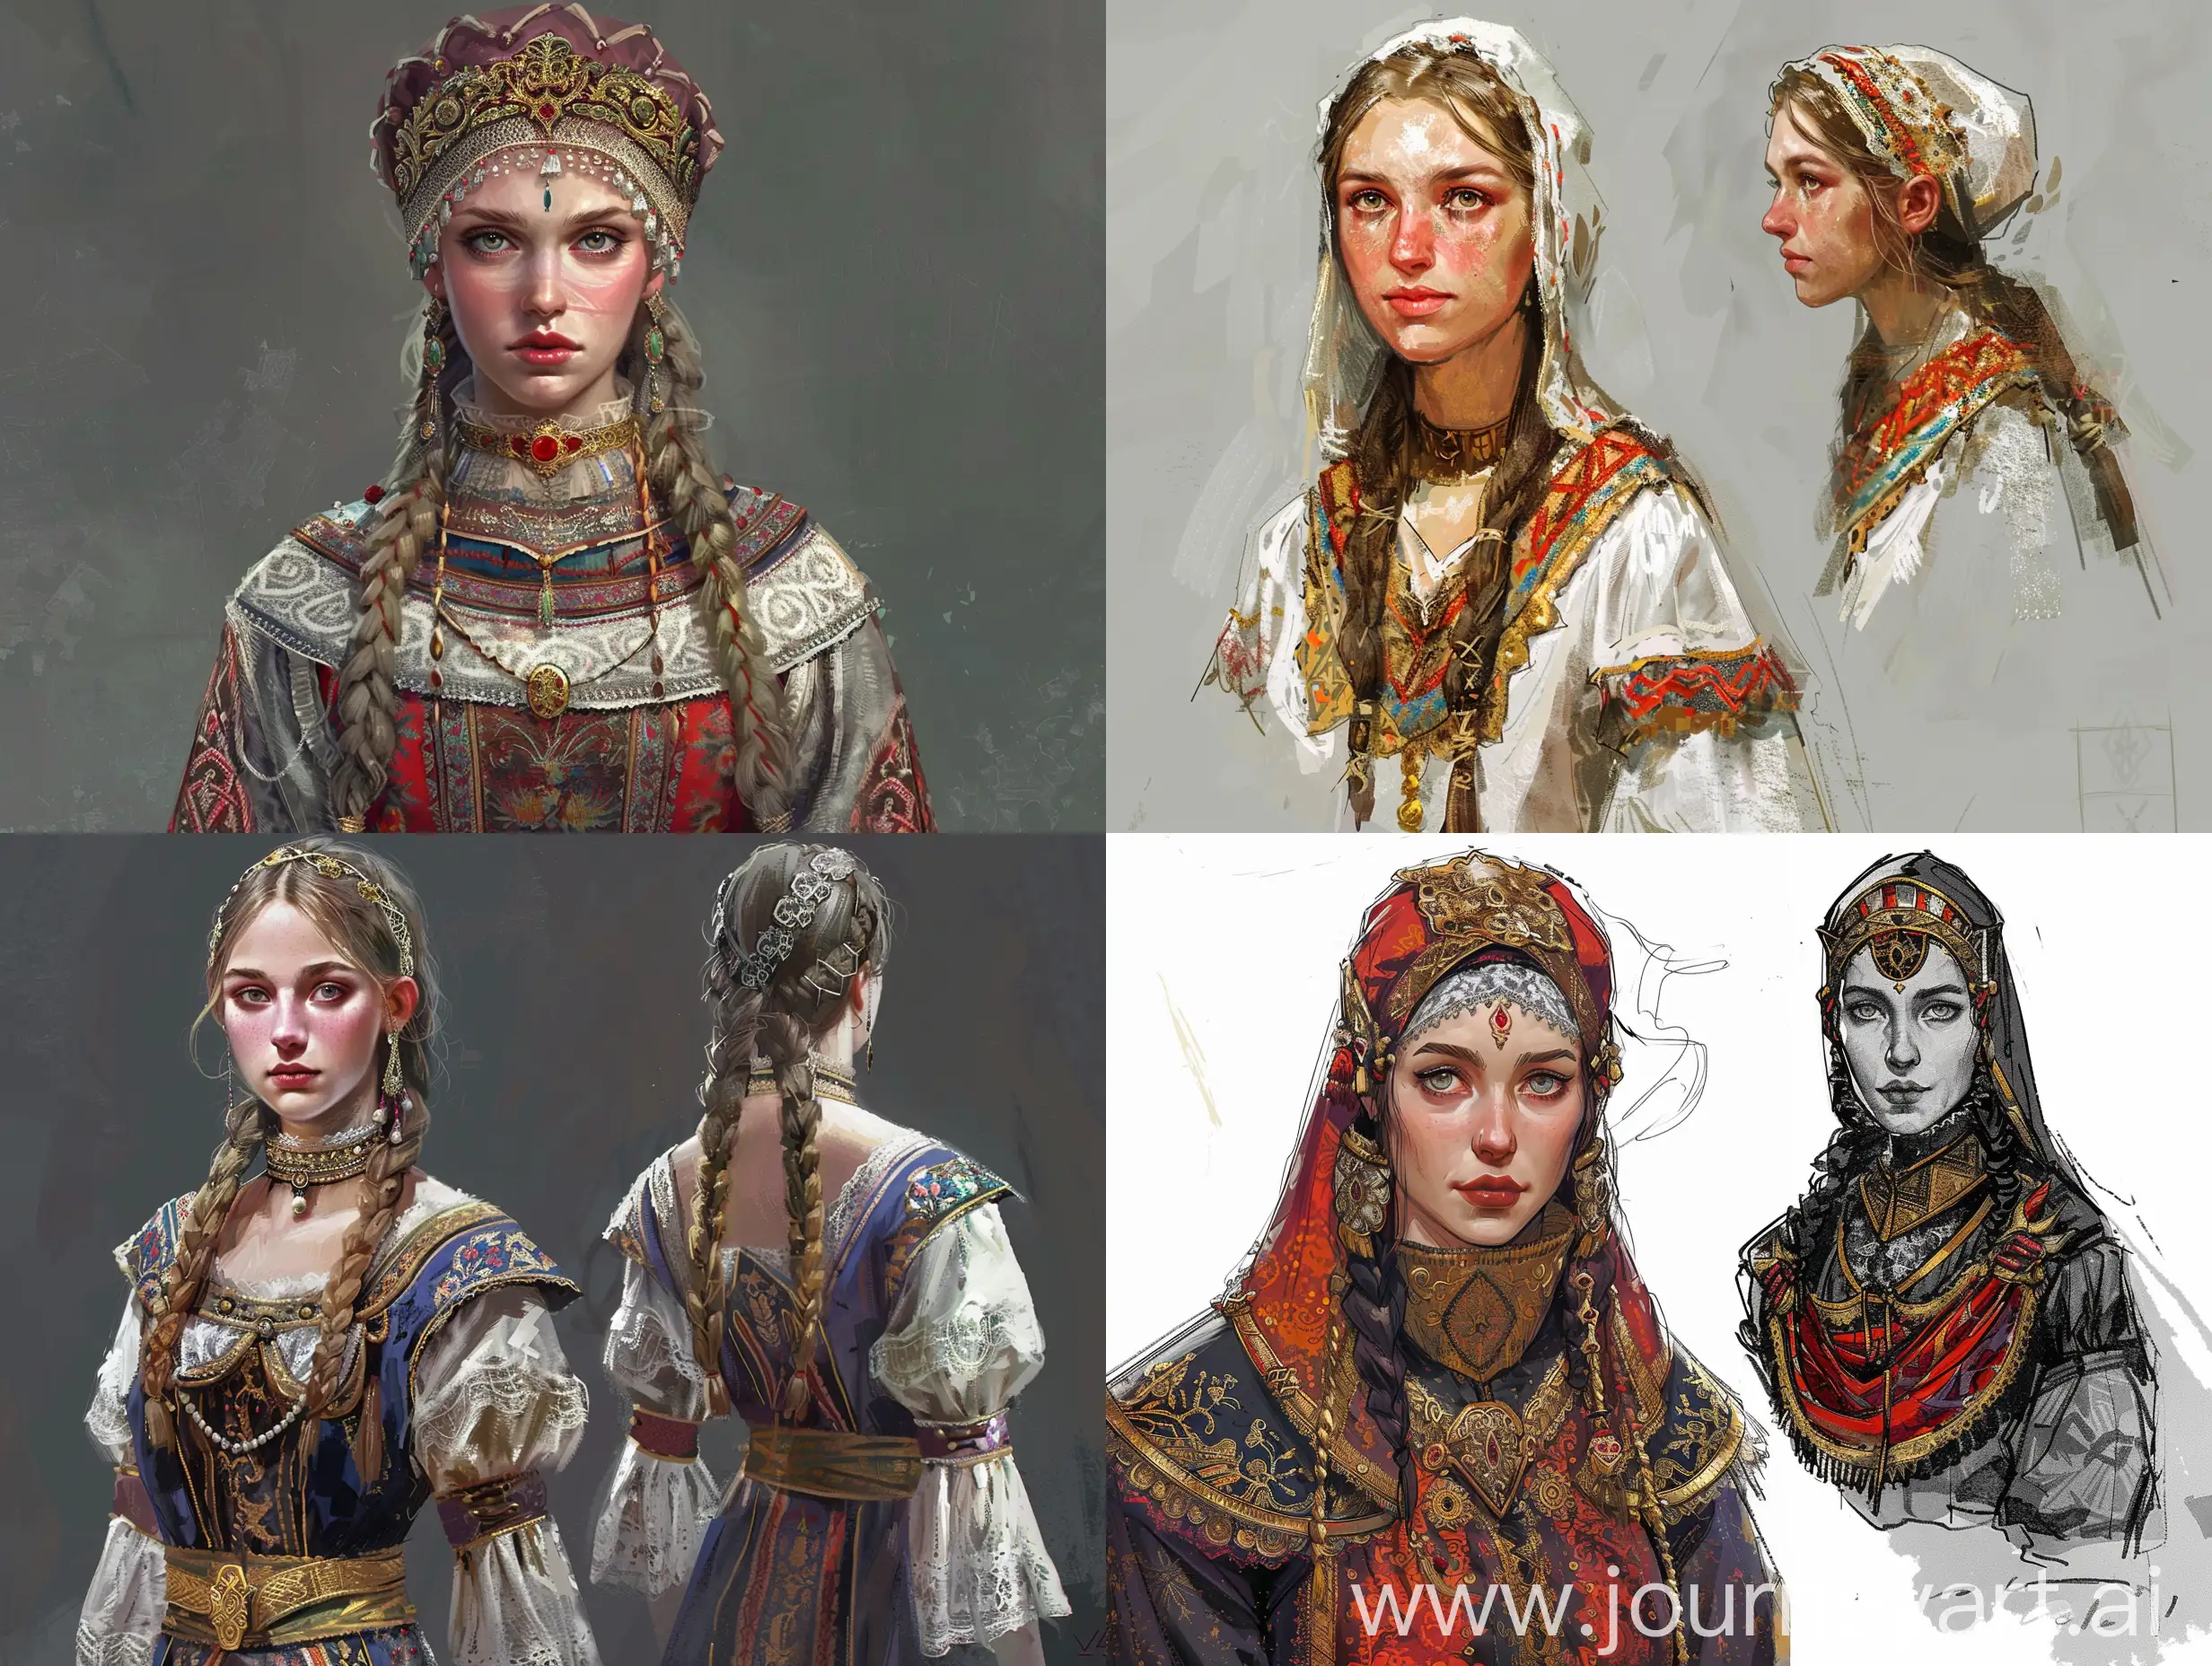 Concept-Art-Vasilisa-the-Beautiful-in-Slavic-SoulsLike-Game-with-Kokoshnik